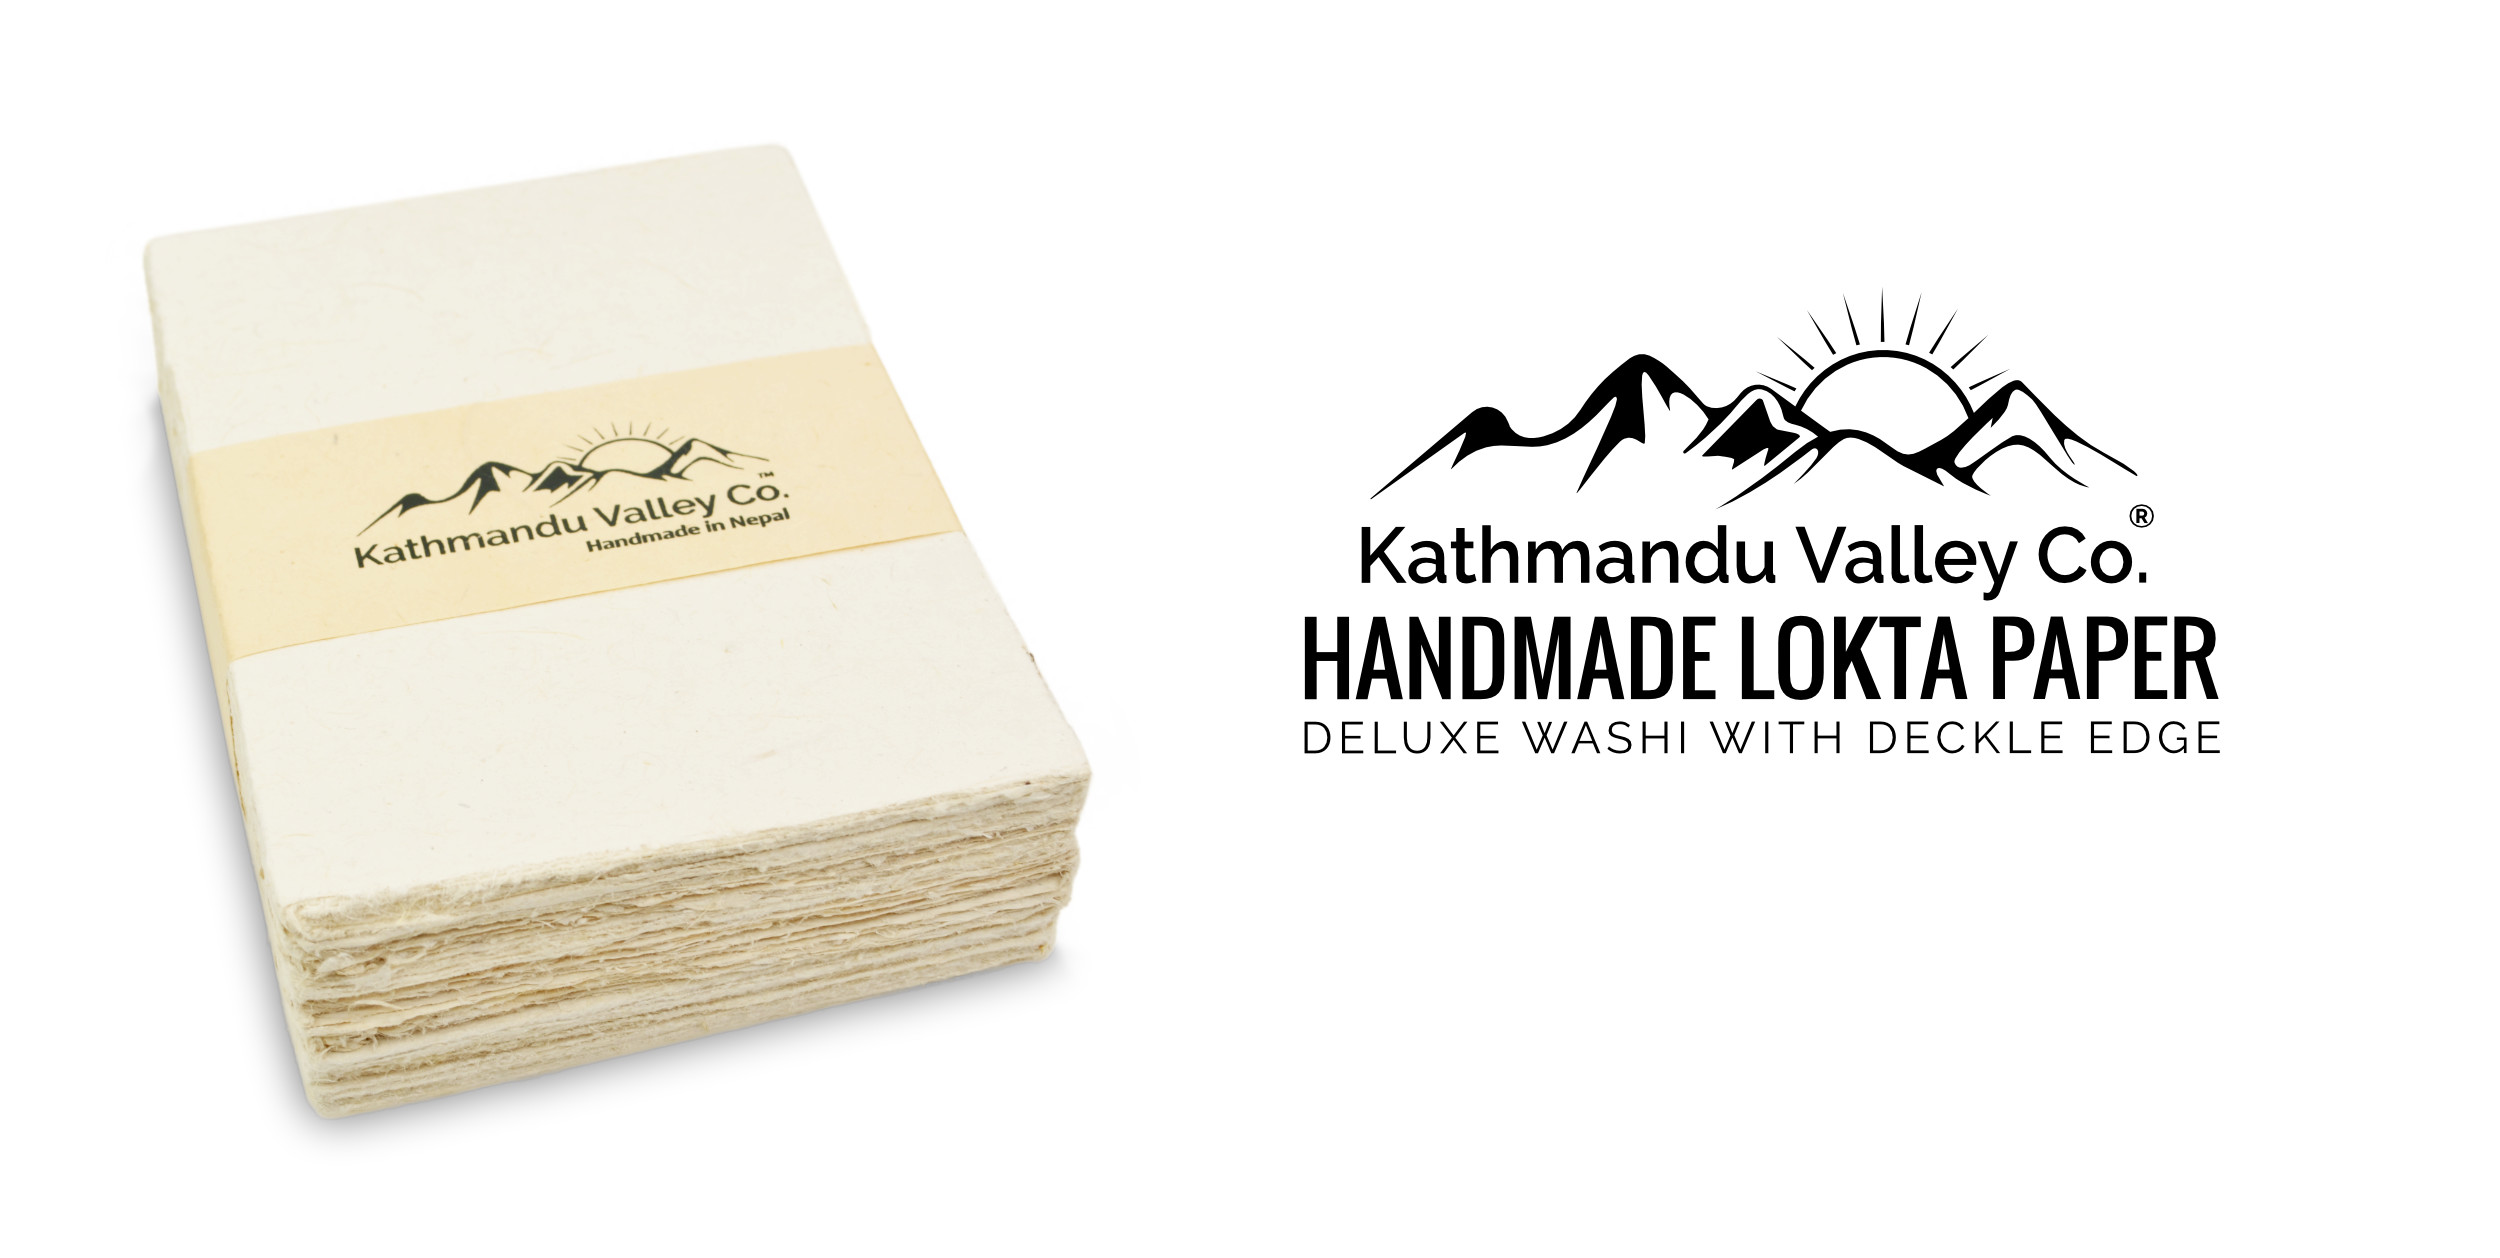 Handmade Lokta Paper Deluxe Washi Japanese Method by Kathmandu Valley Co.